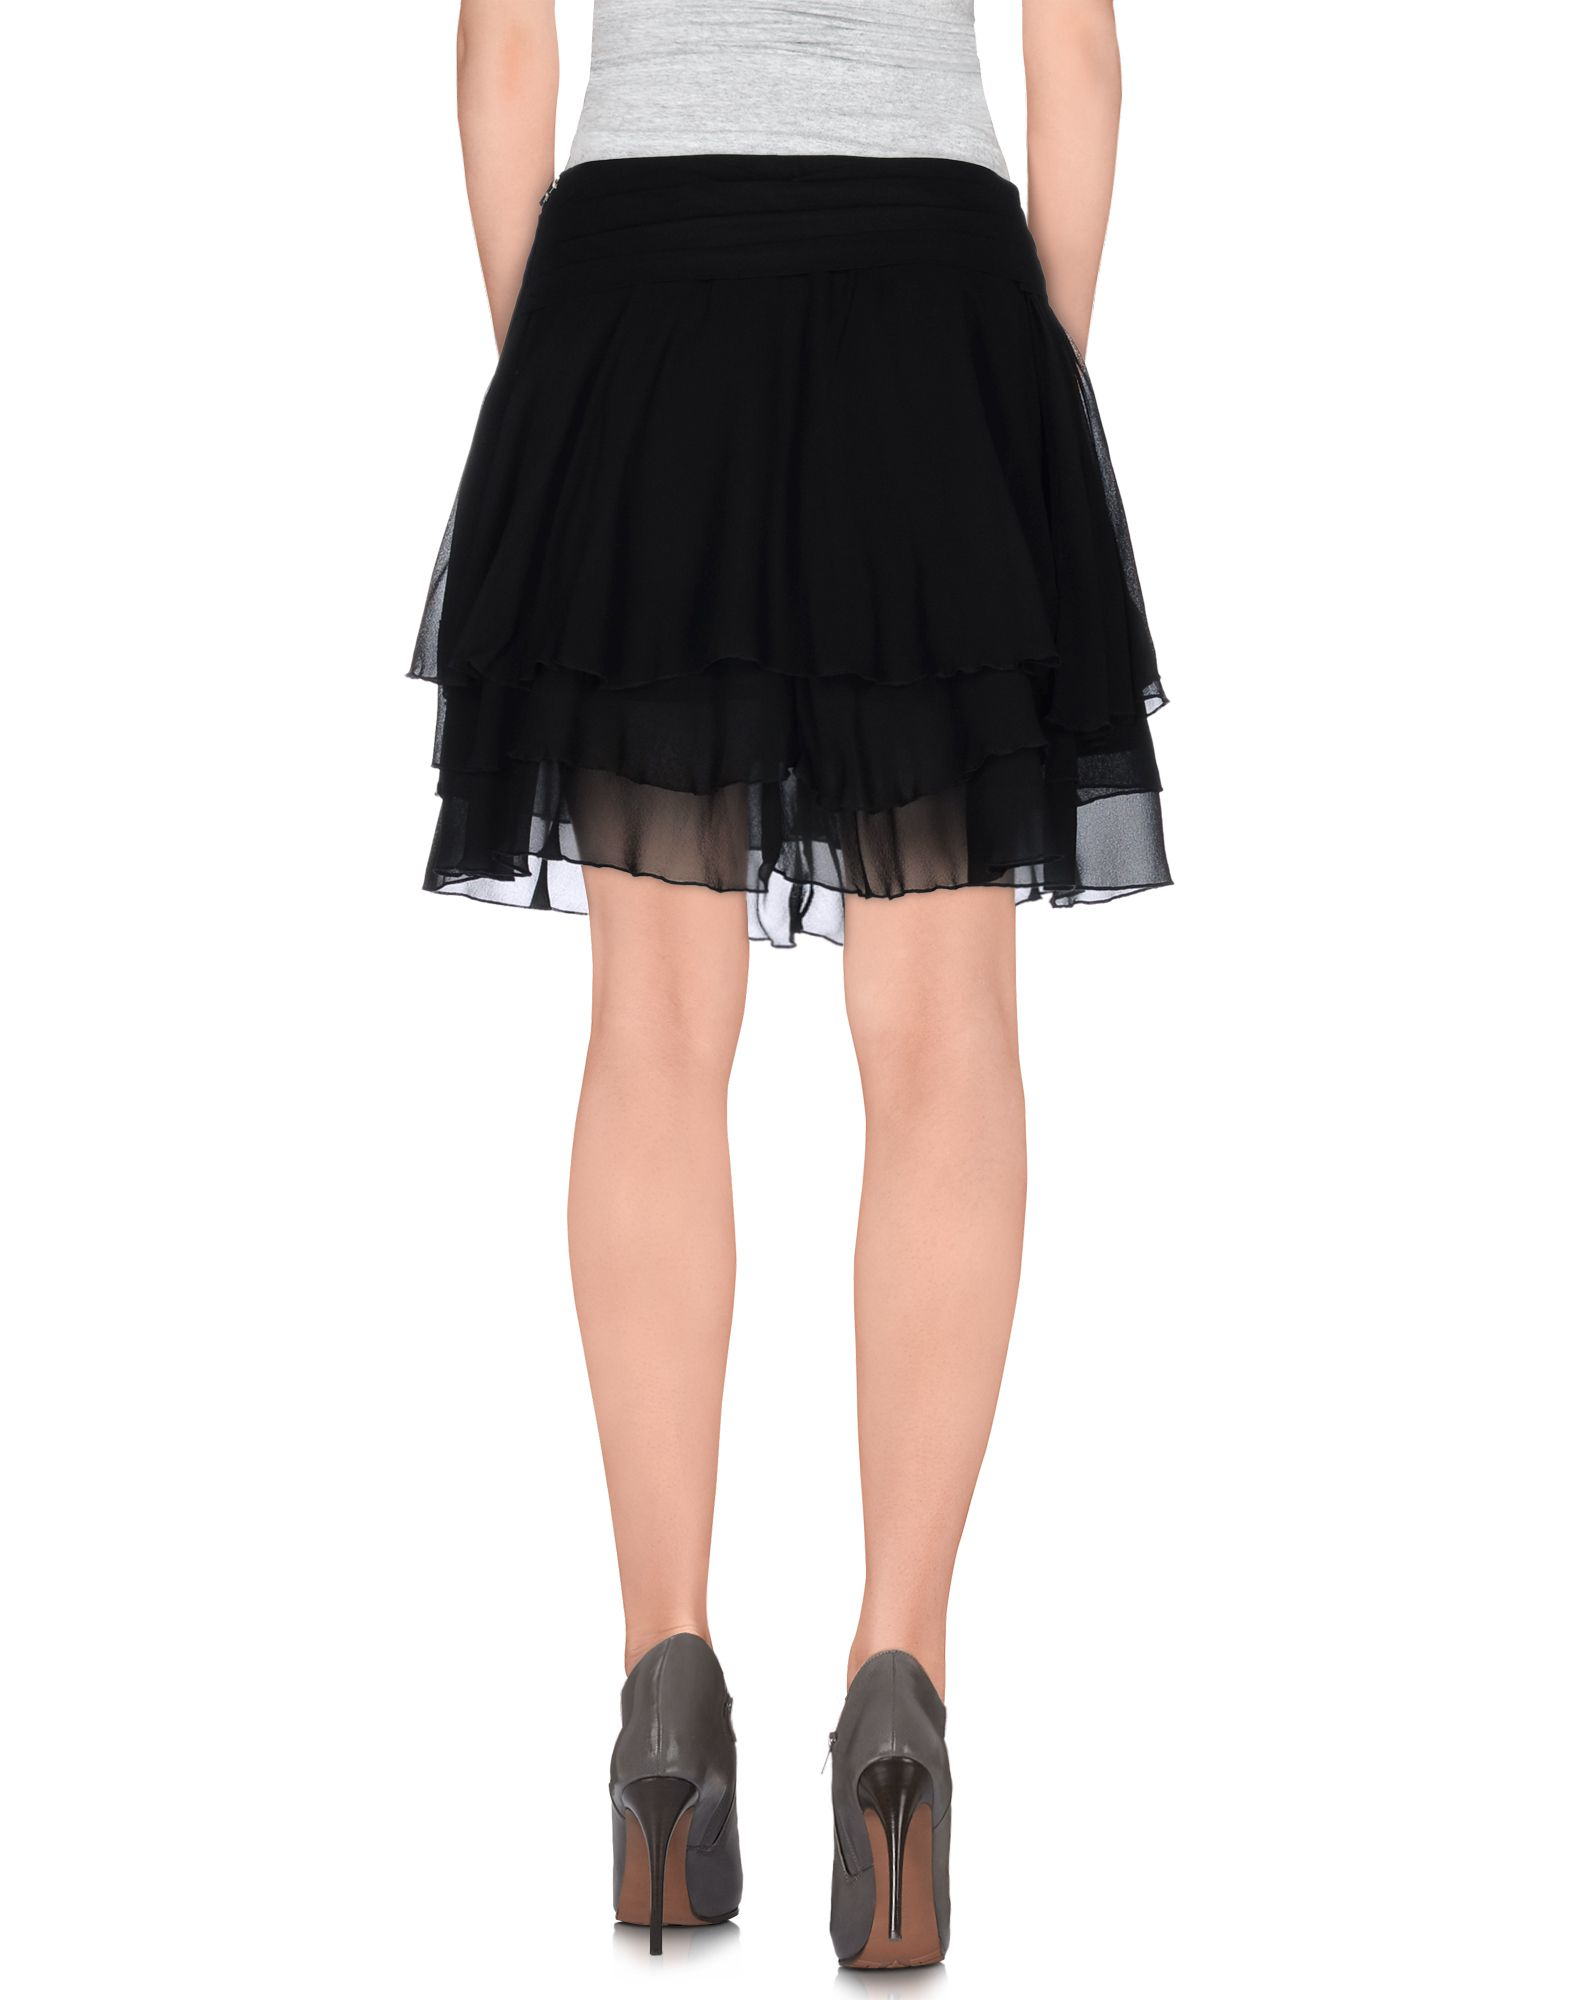 Lyst - See By Chloé Mini Skirt in Black